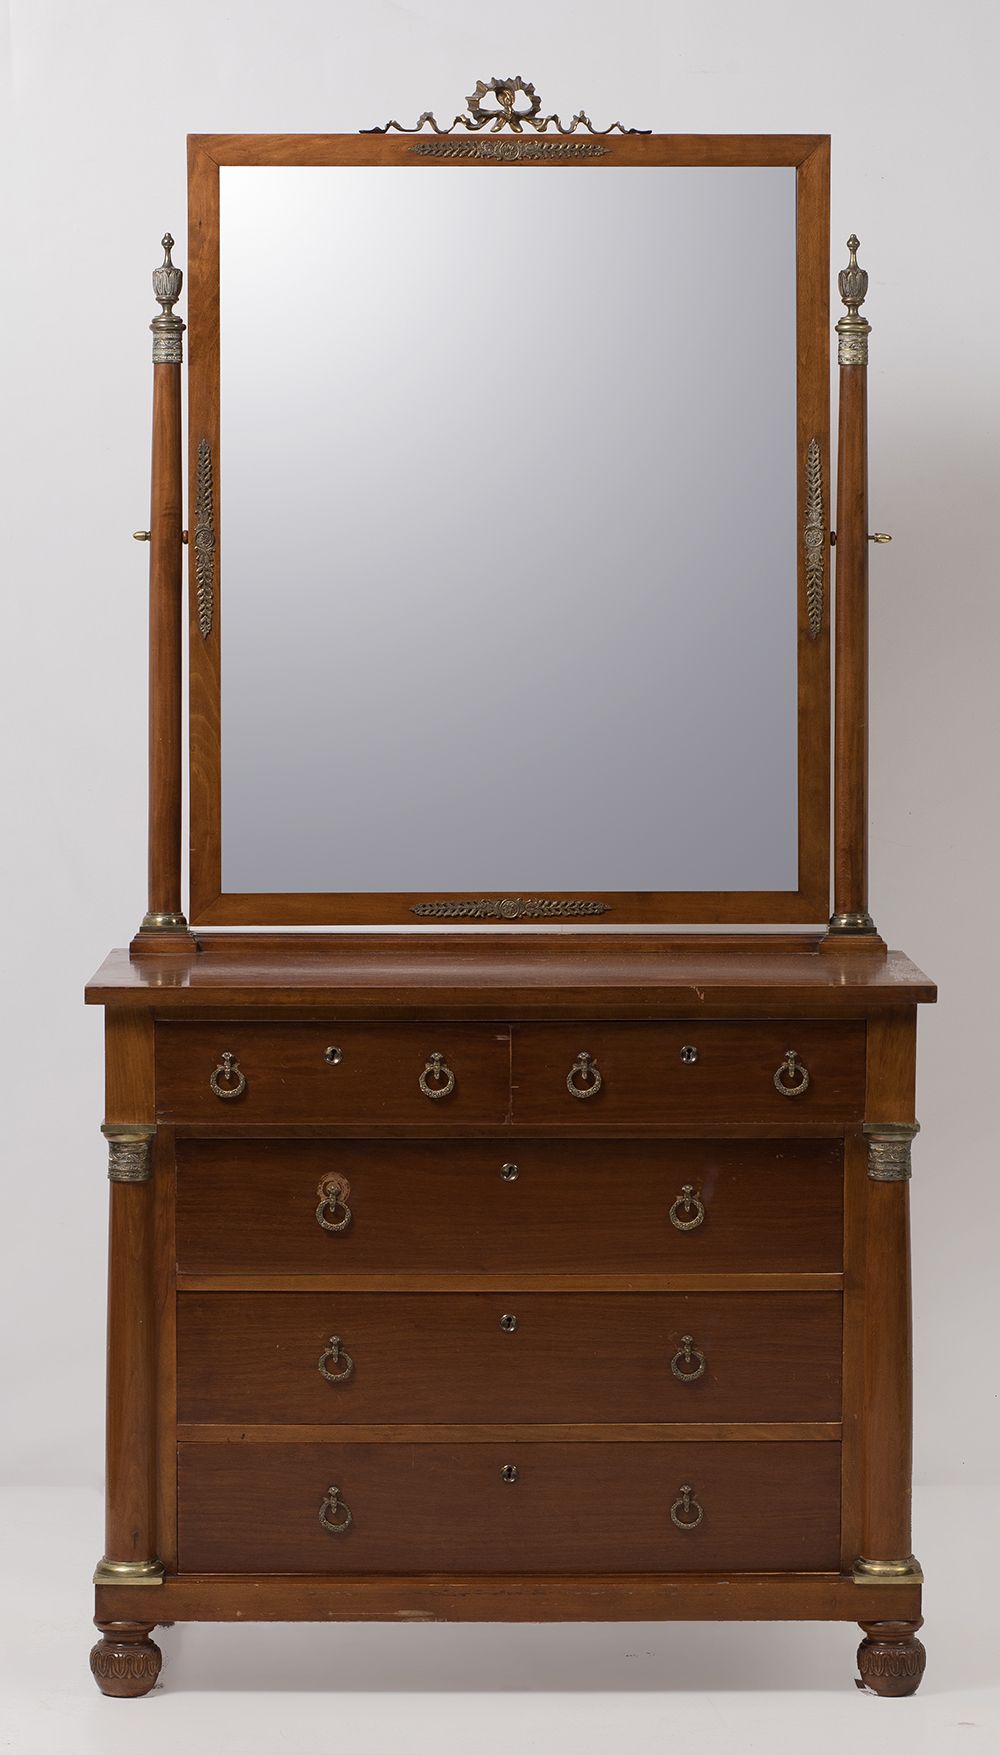 Empire style dresser 帝国风格的梳妆台，20世纪。青铜器的应用。在倾斜的镜子中完成。 尺寸：203×105×56厘米。